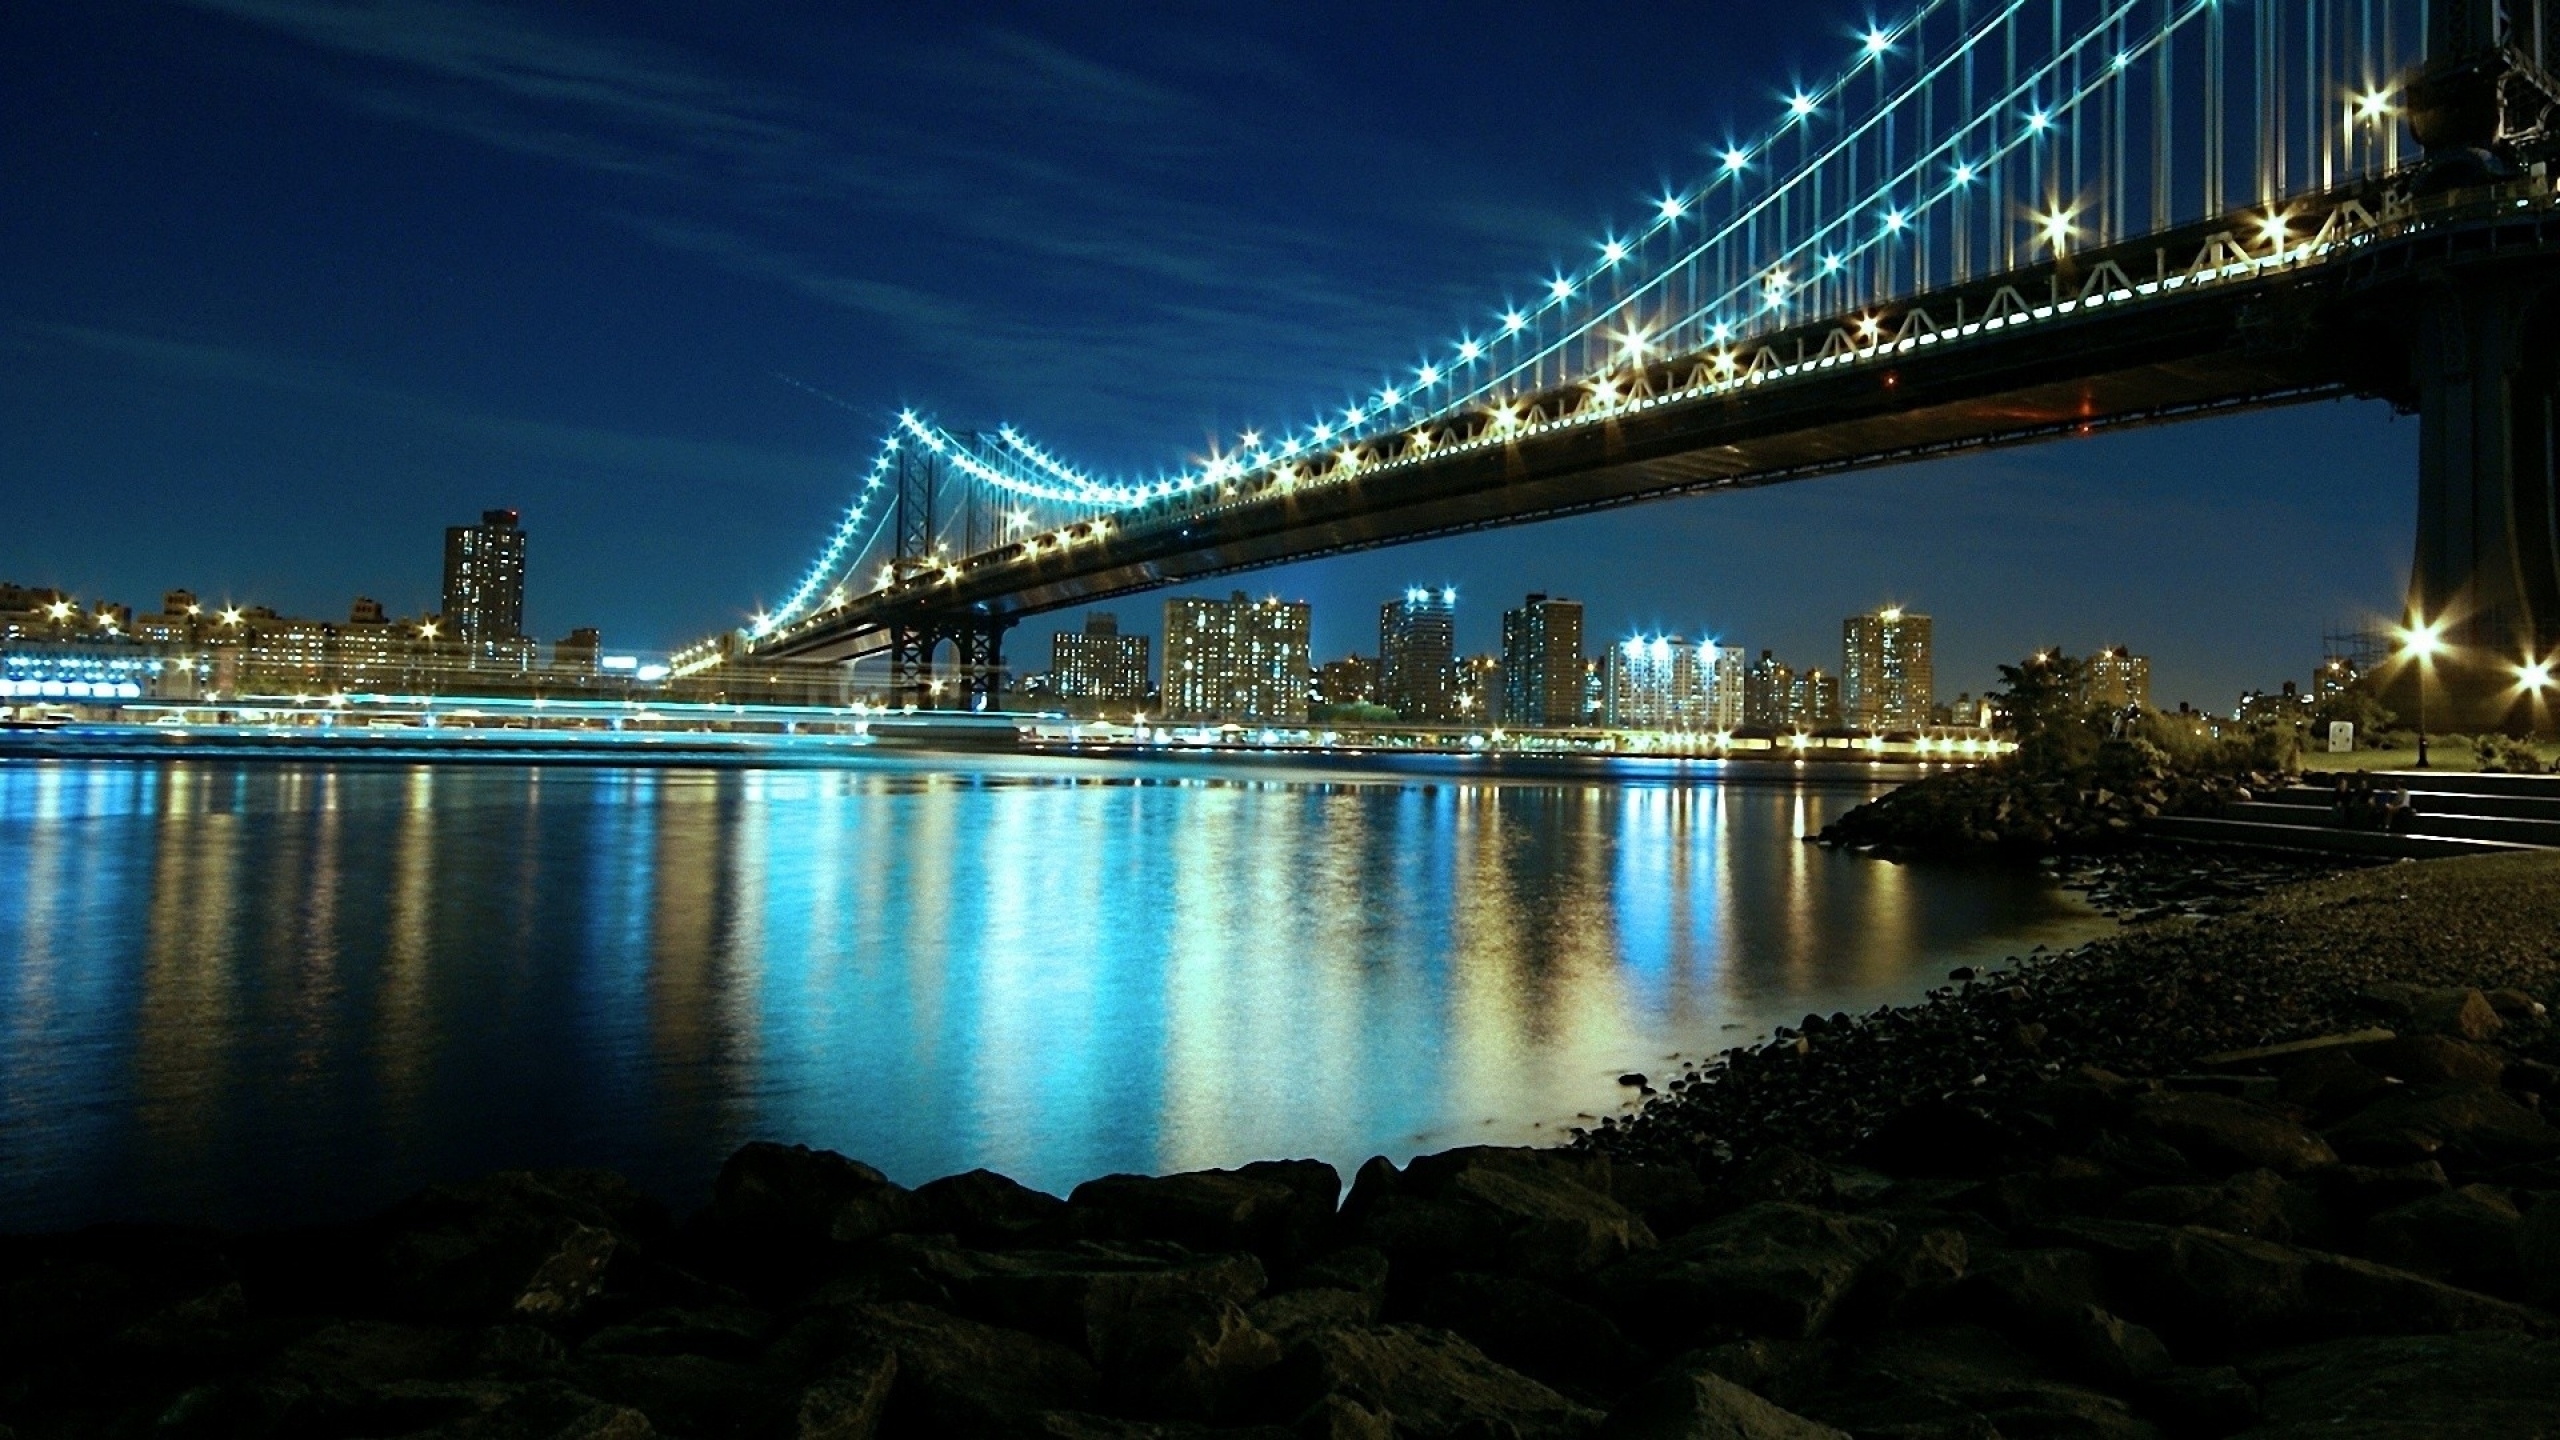 Обои качества 1080. Манхэттен мост Нью-Йорк. Манхэттенский мост фон. Бруклинский мост Нью-Йорк. Манхэттен мост Нью-Йорк ночью.